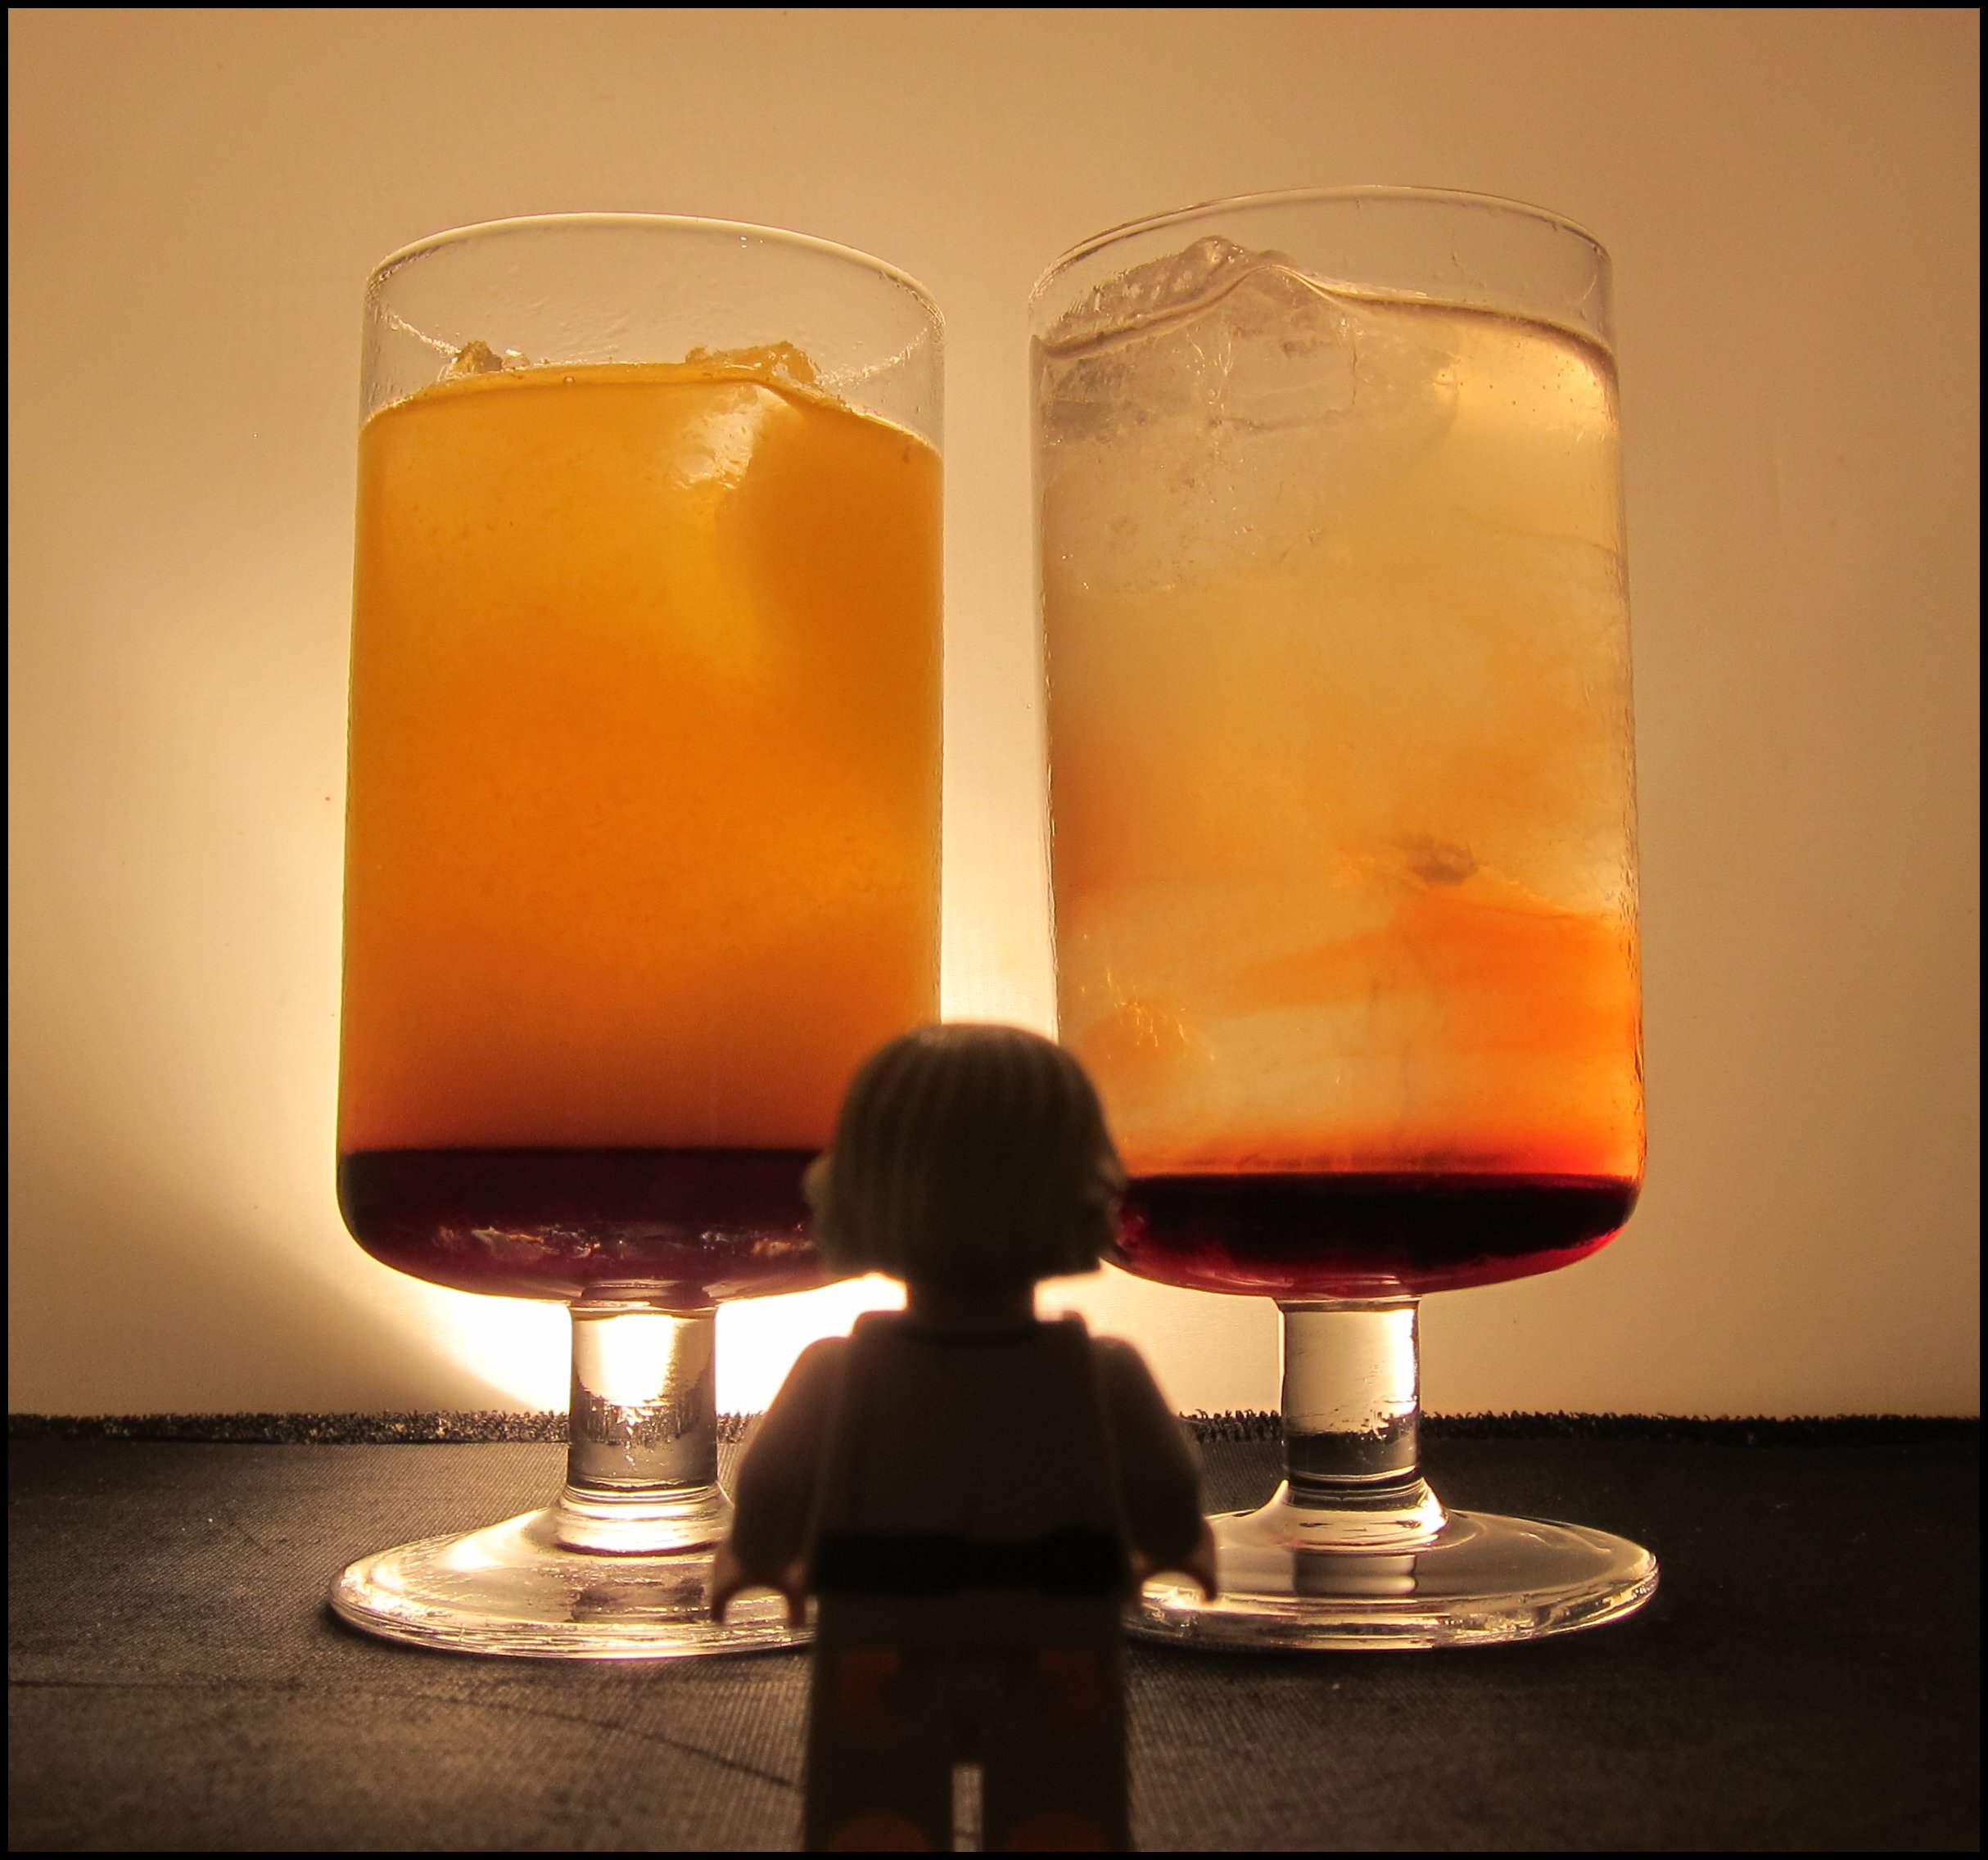 https://summerfruitcup.files.wordpress.com/2016/05/binary-sunsets-cocktail-episode-iv-star-wars-drinks-final.jpg